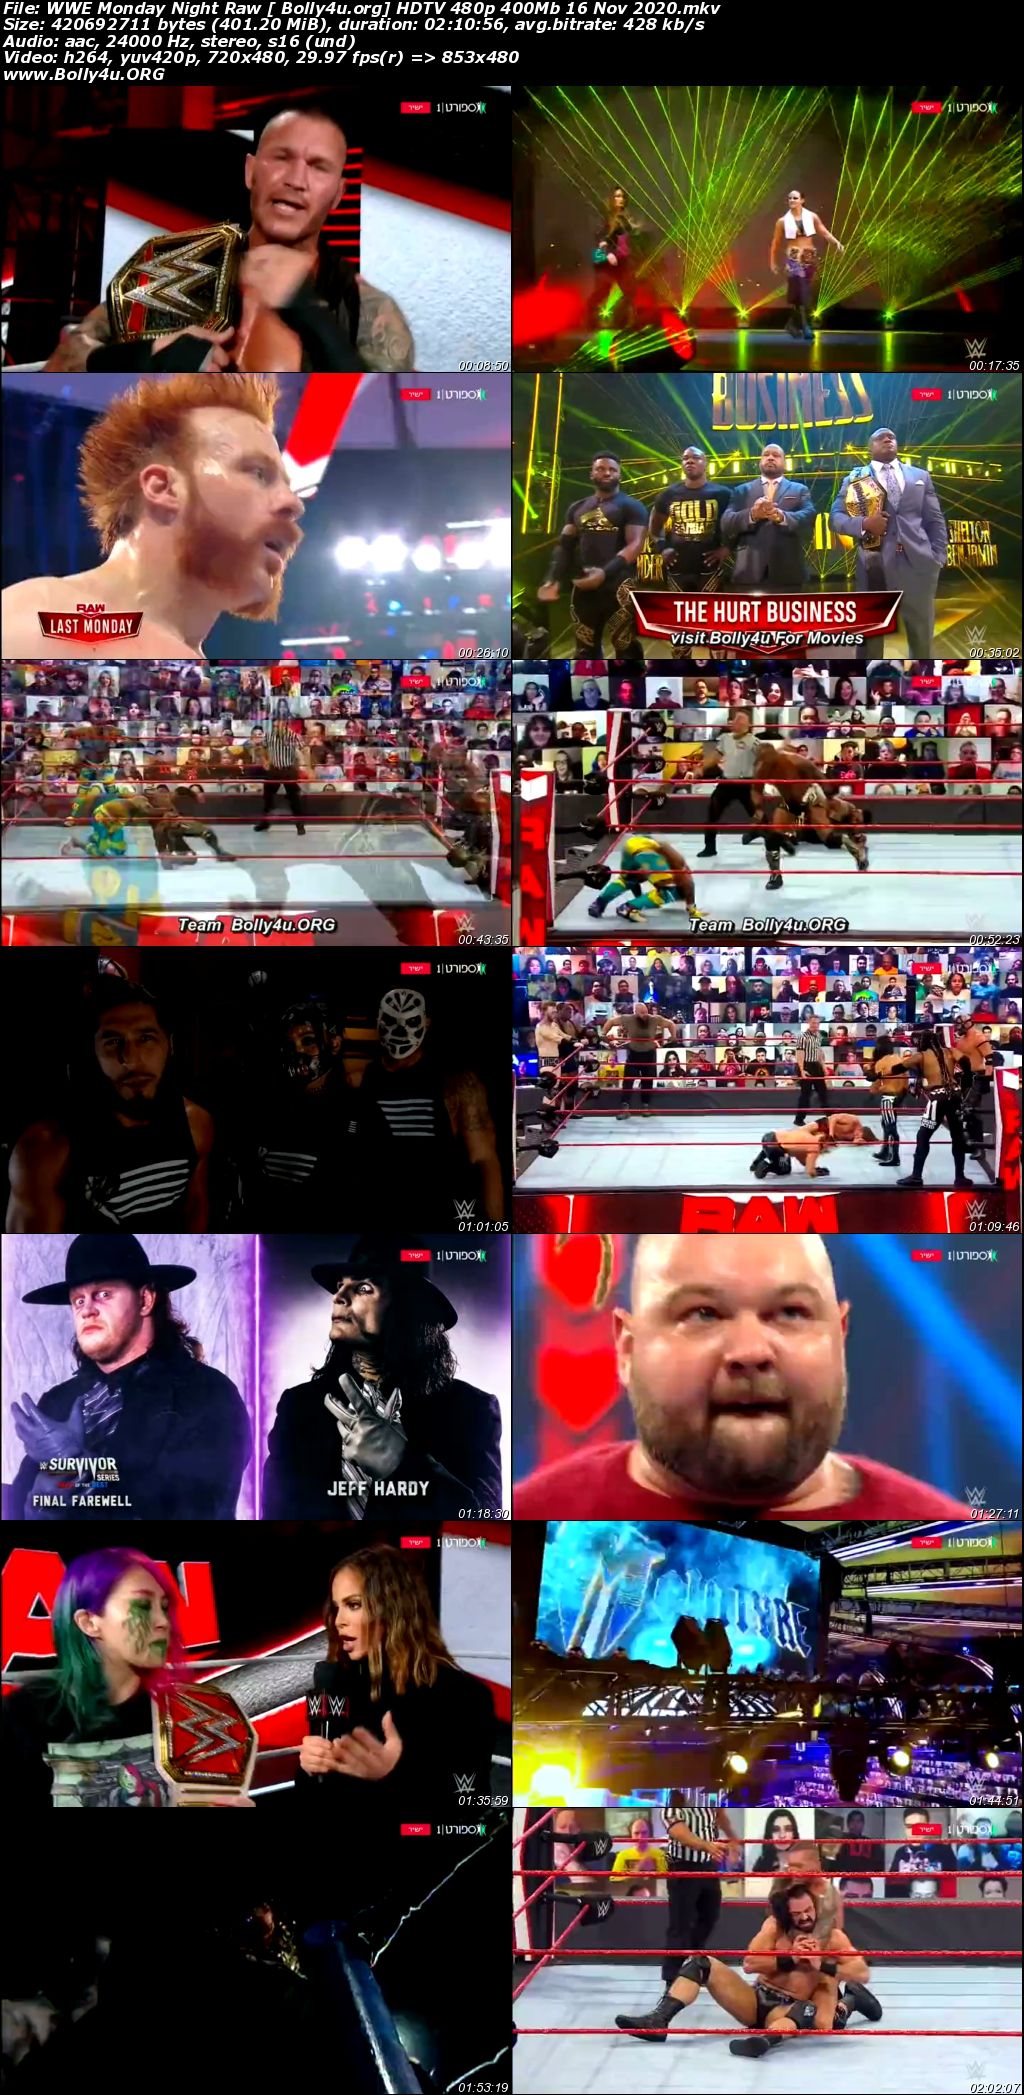 WWE Monday Night Raw HDTV 480p 400Mb 16 Nov 2020 Download